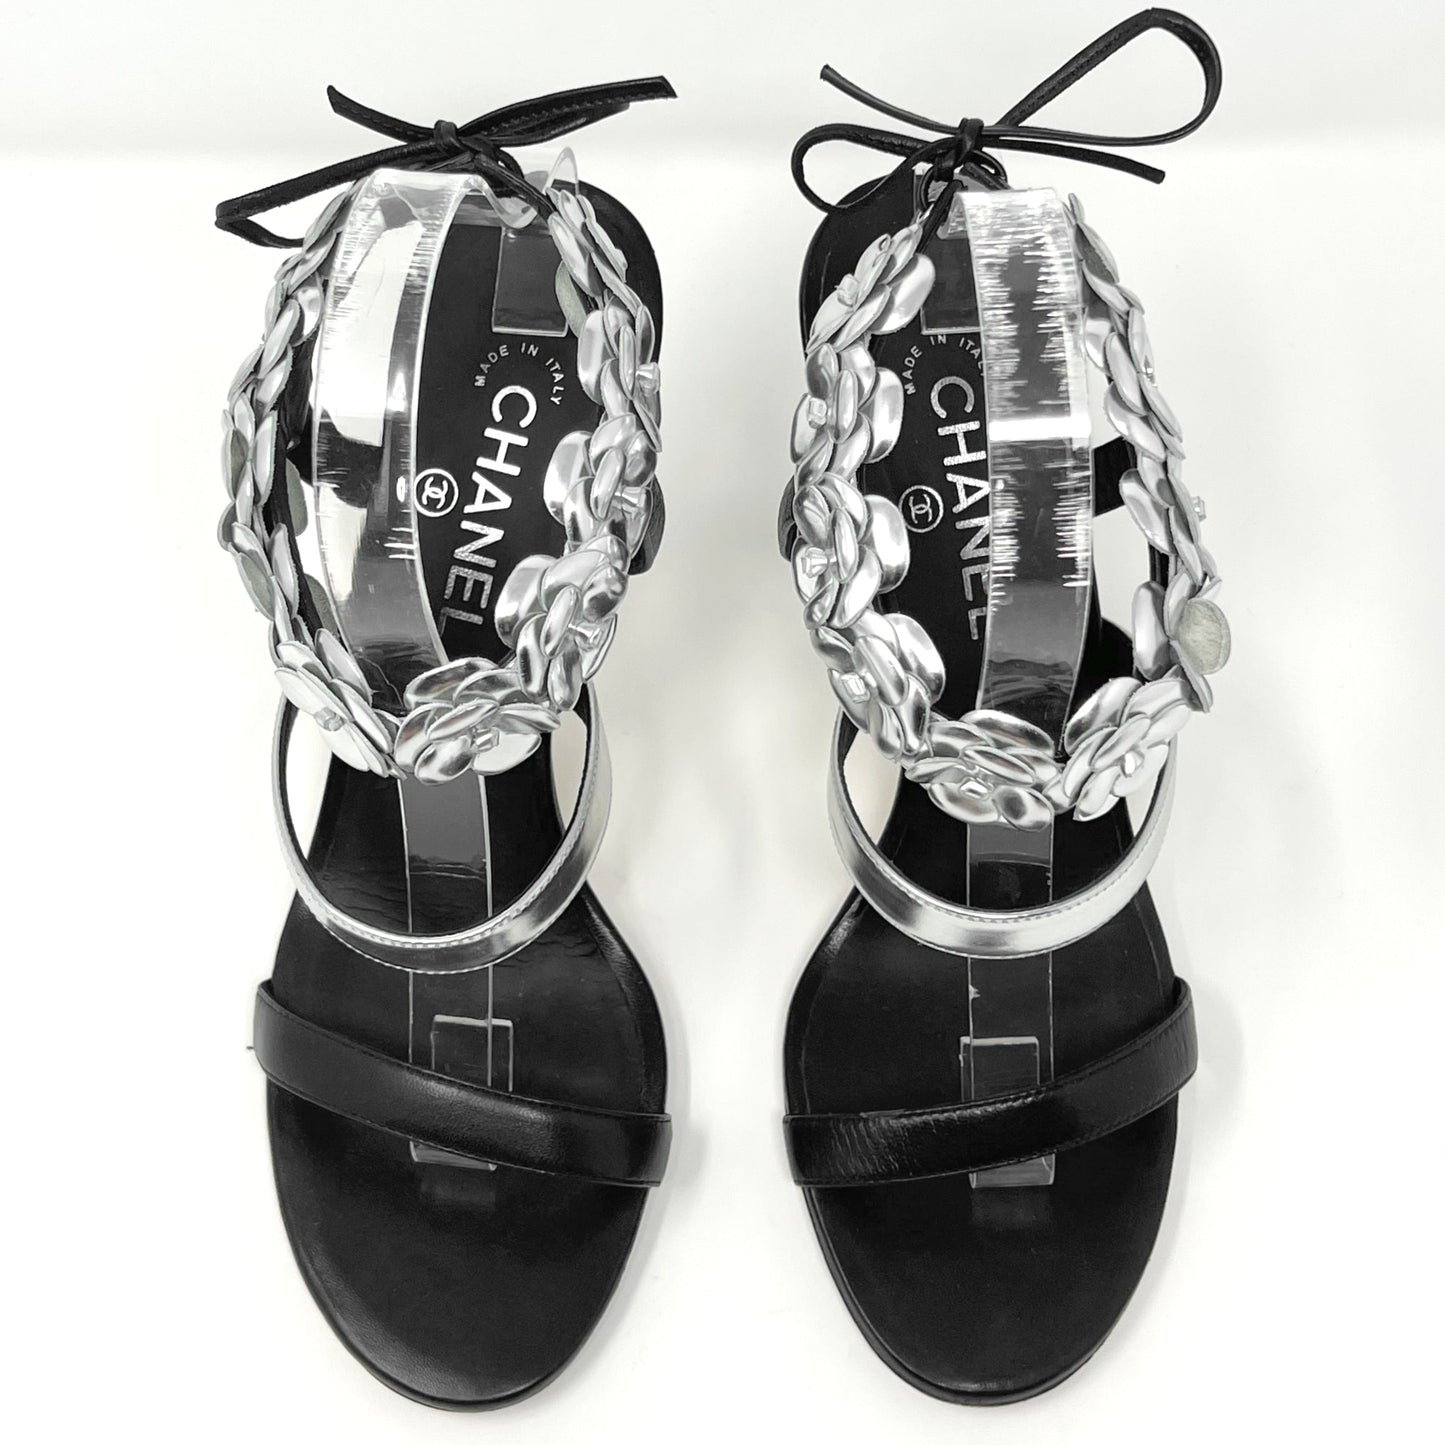 Chanel Black Silver Leather Camellia Flower Logo Ankle Strap High Heels Sandals Size EU 40